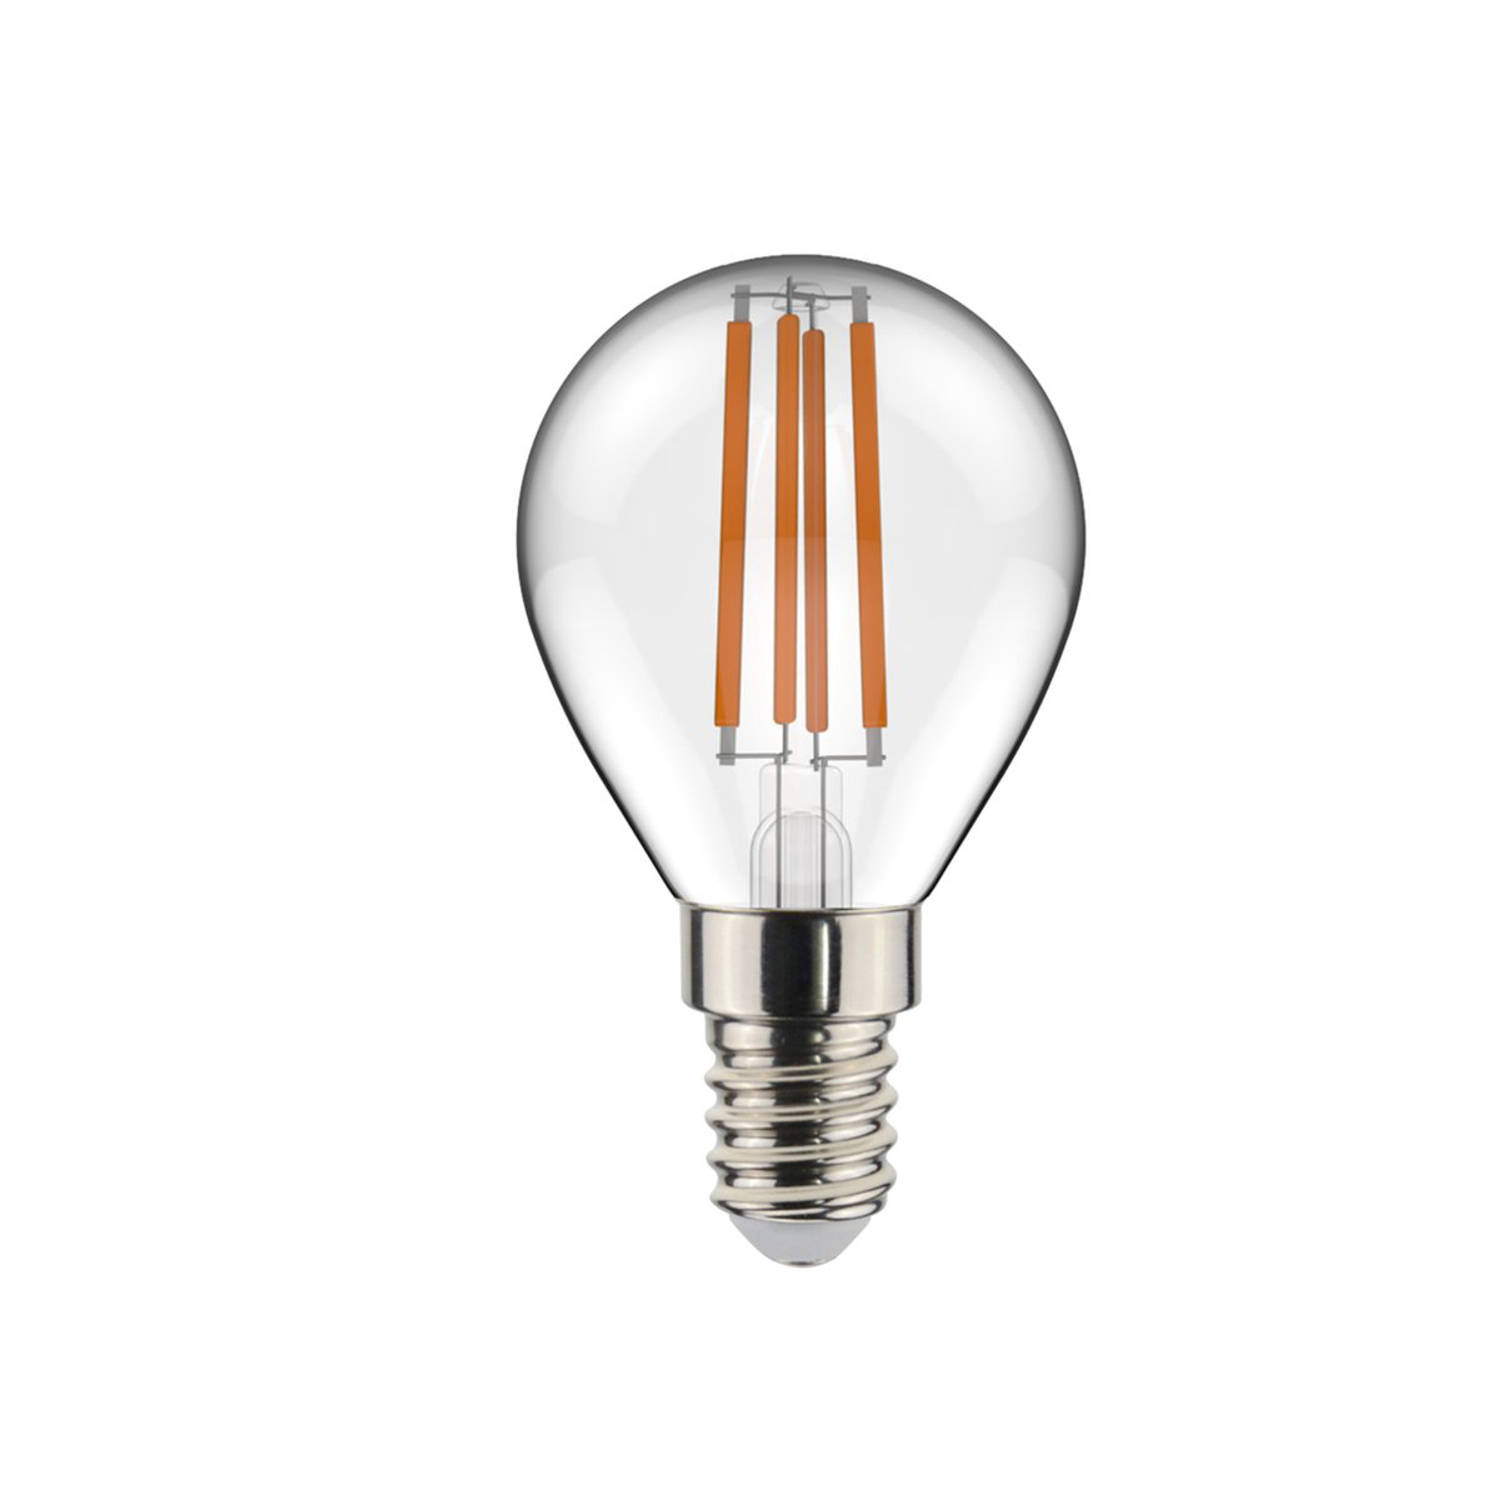 gedragen Verouderd Menagerry Proventa LED Lamp E14 Filament - Dimbaar zonder dimmer - 5 x G45 kogellamp  | Blokker